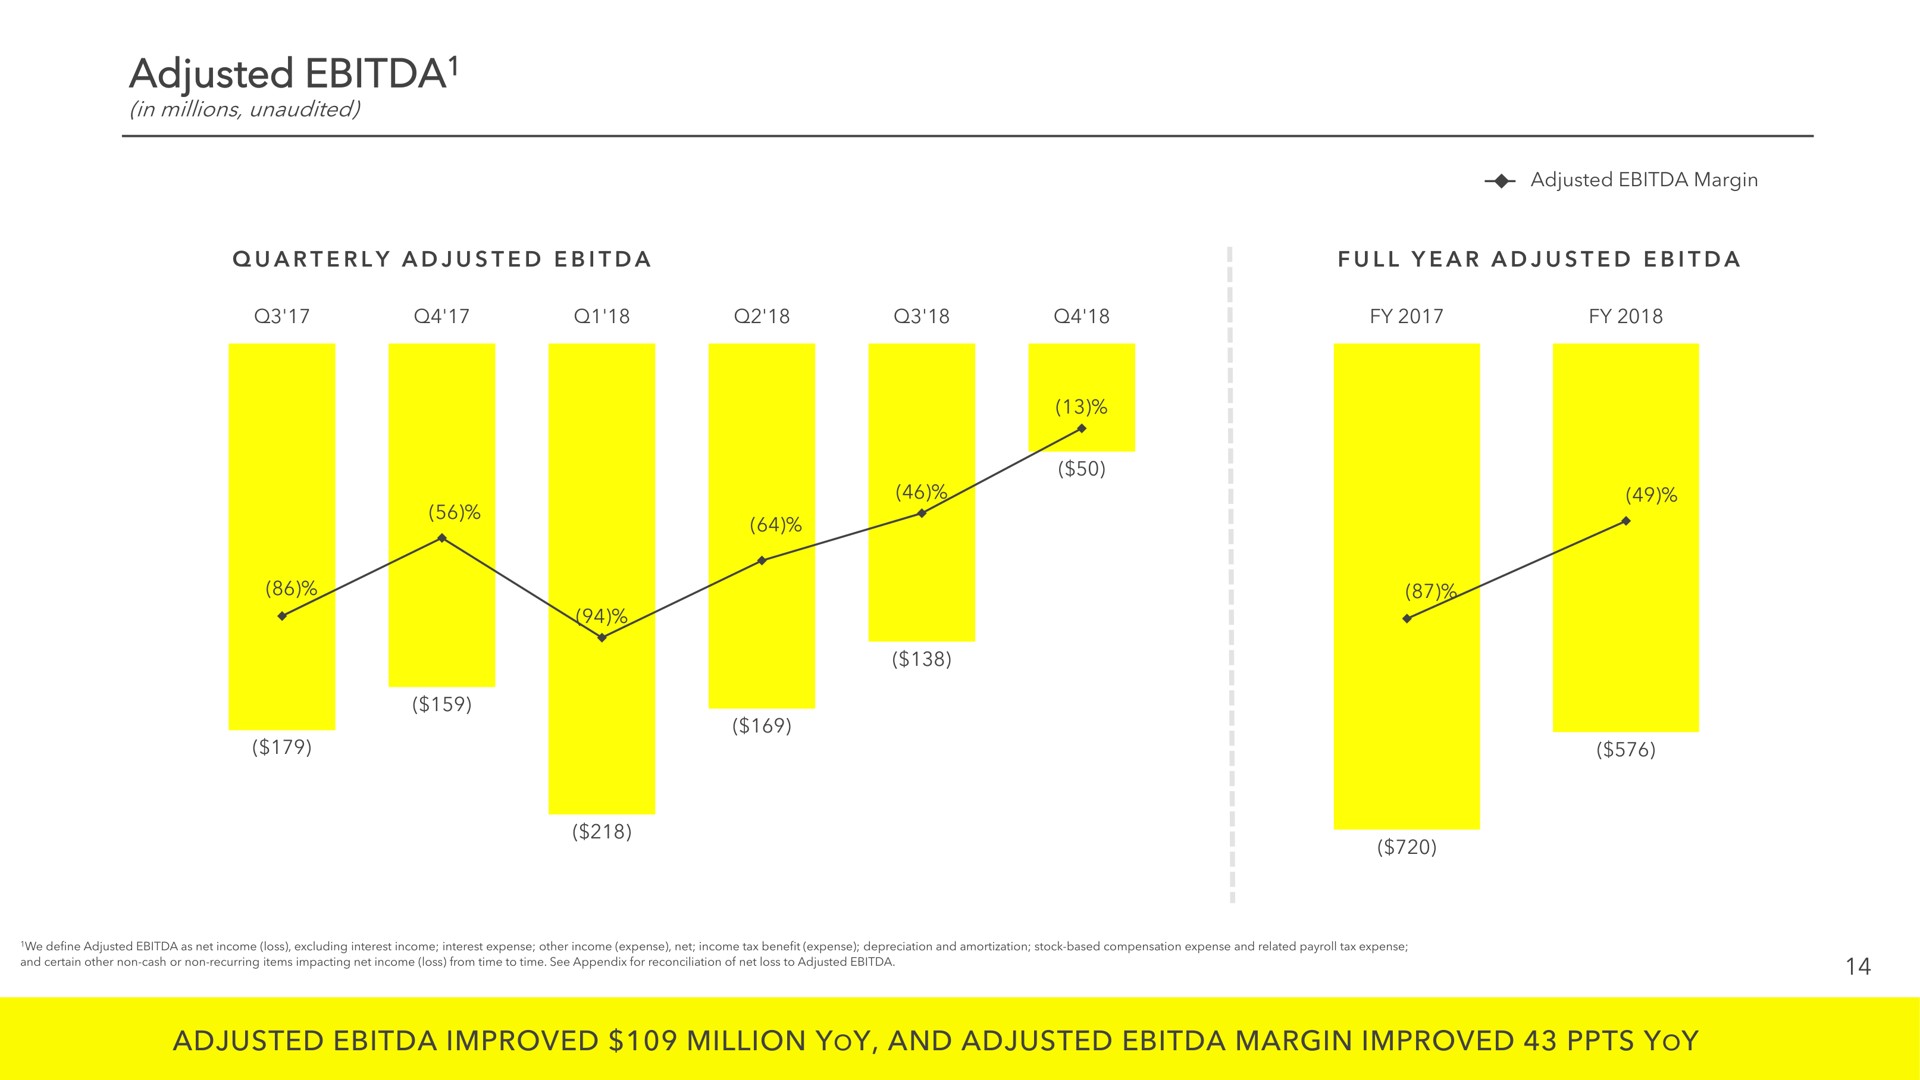 adjusted adjusted improved million yoy and adjusted margin improved yoy | Snap Inc